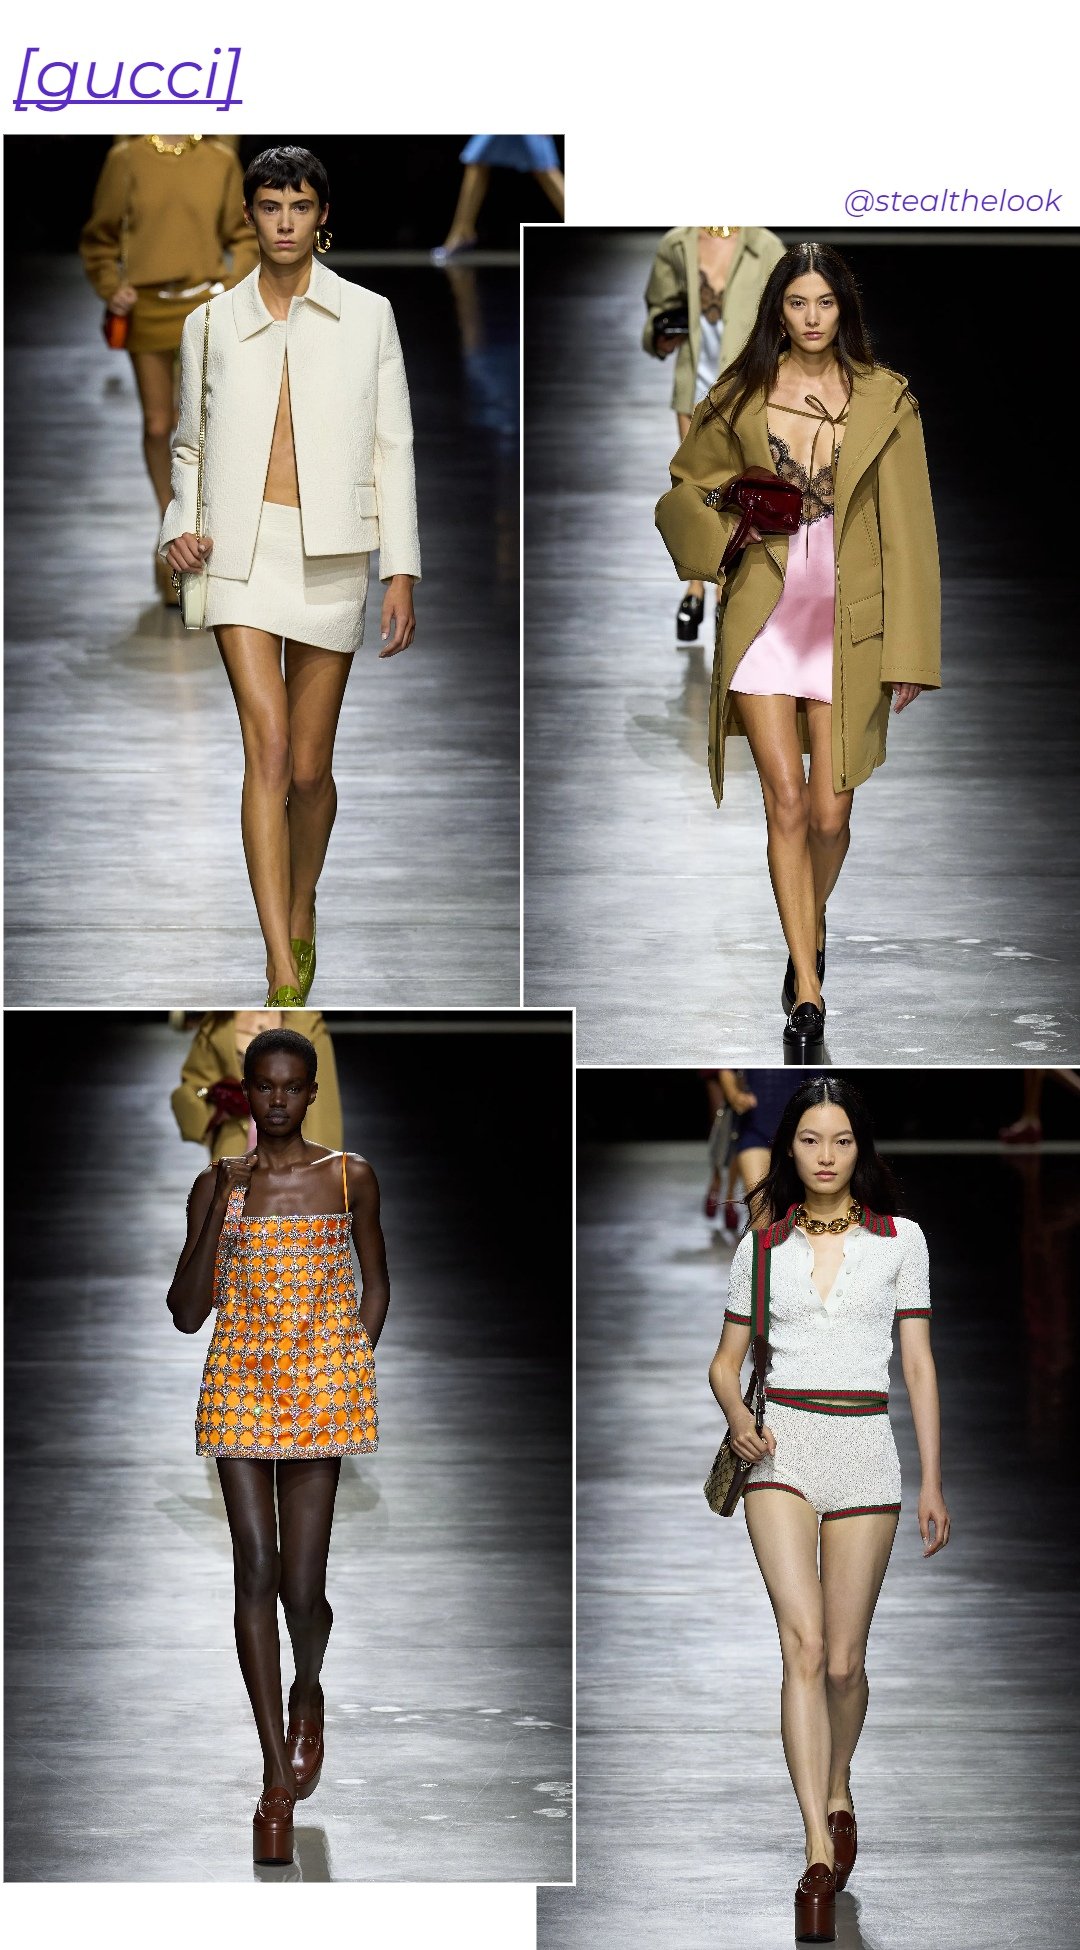 Gucci - roupas diversas - Milano Fashion Week - primavera - modelos andando na passarela - https://stealthelook.com.br